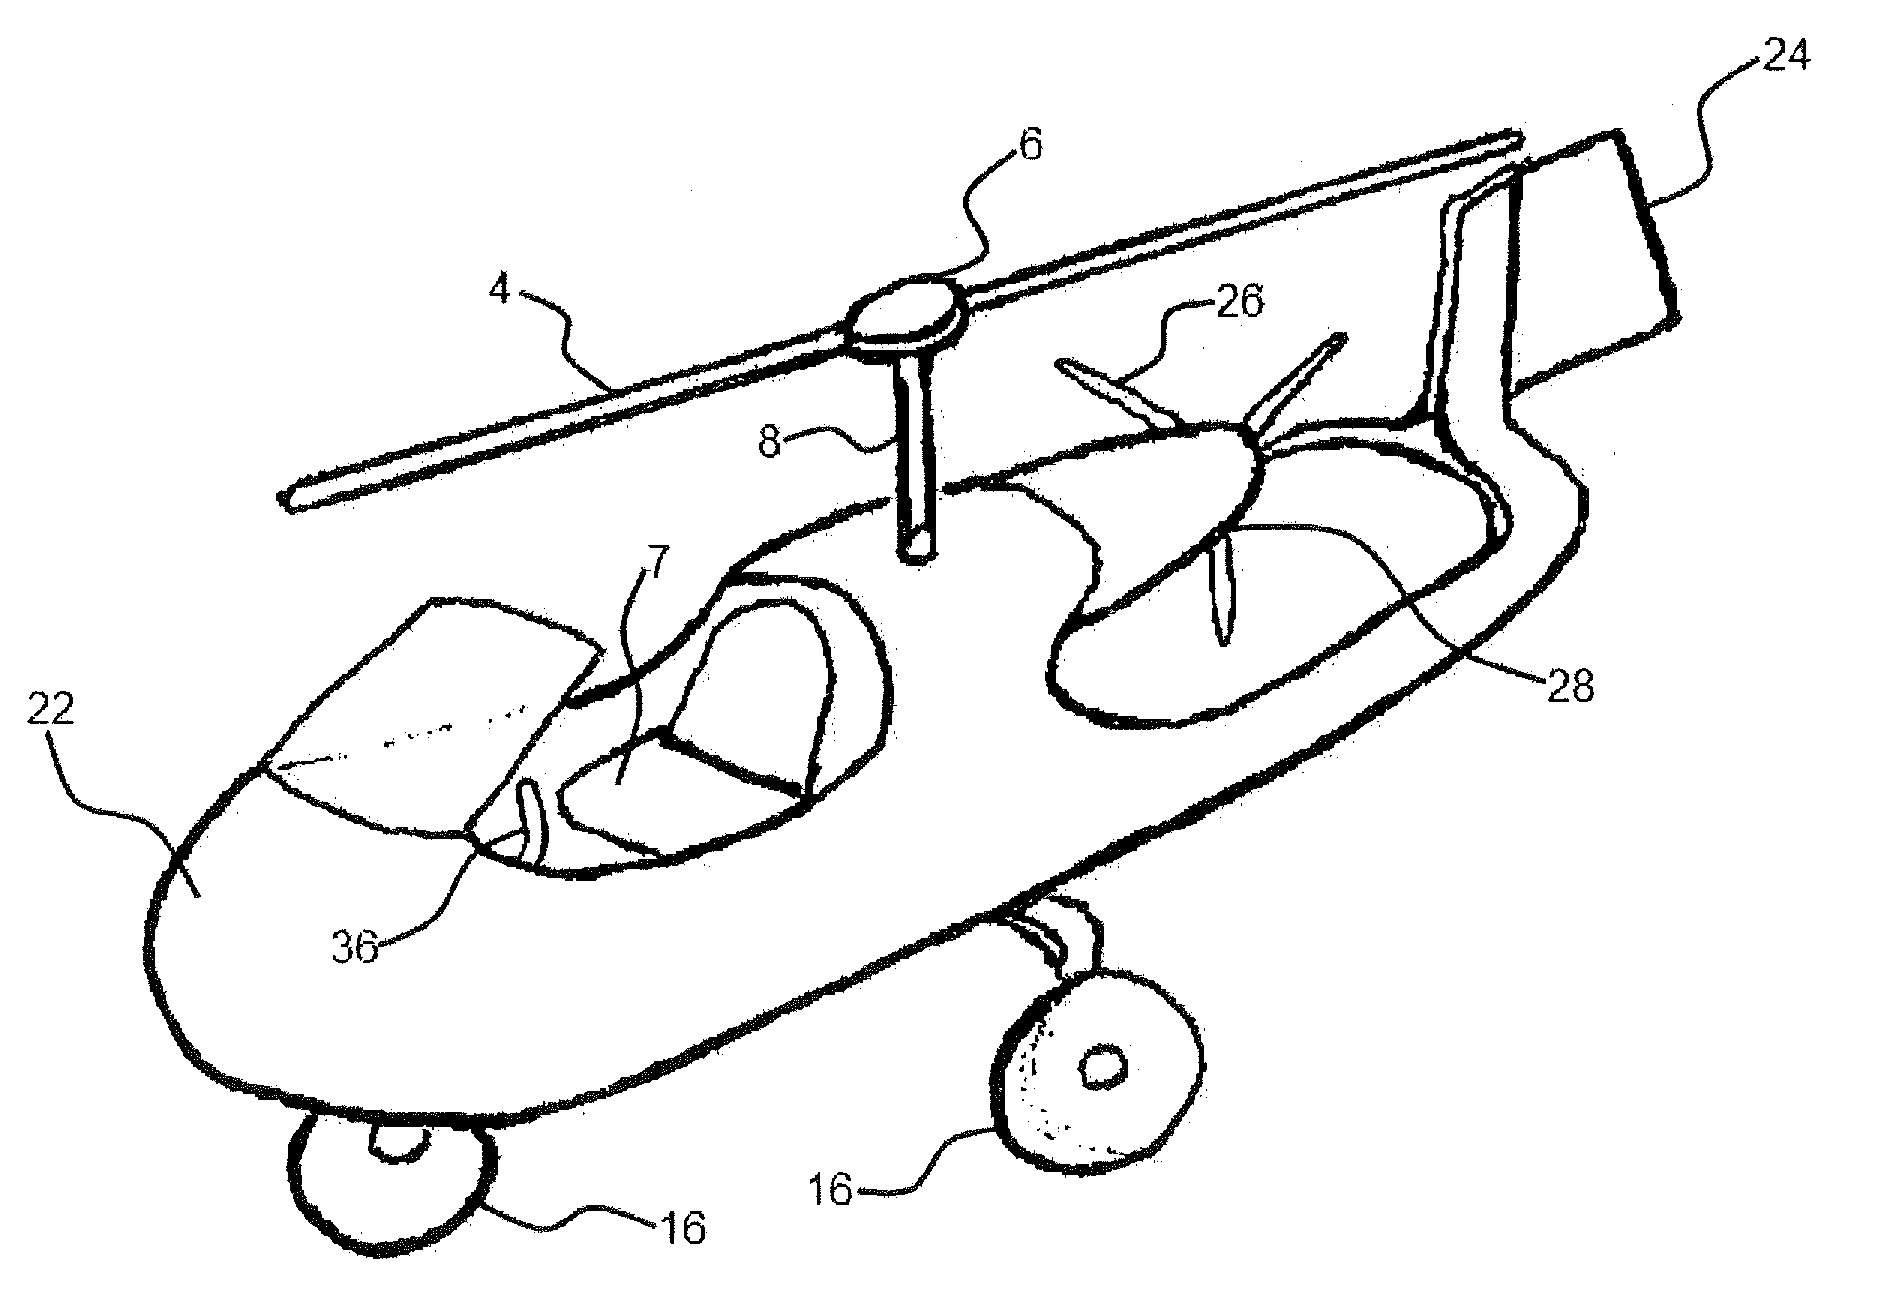 Autogyro with pre-rotation